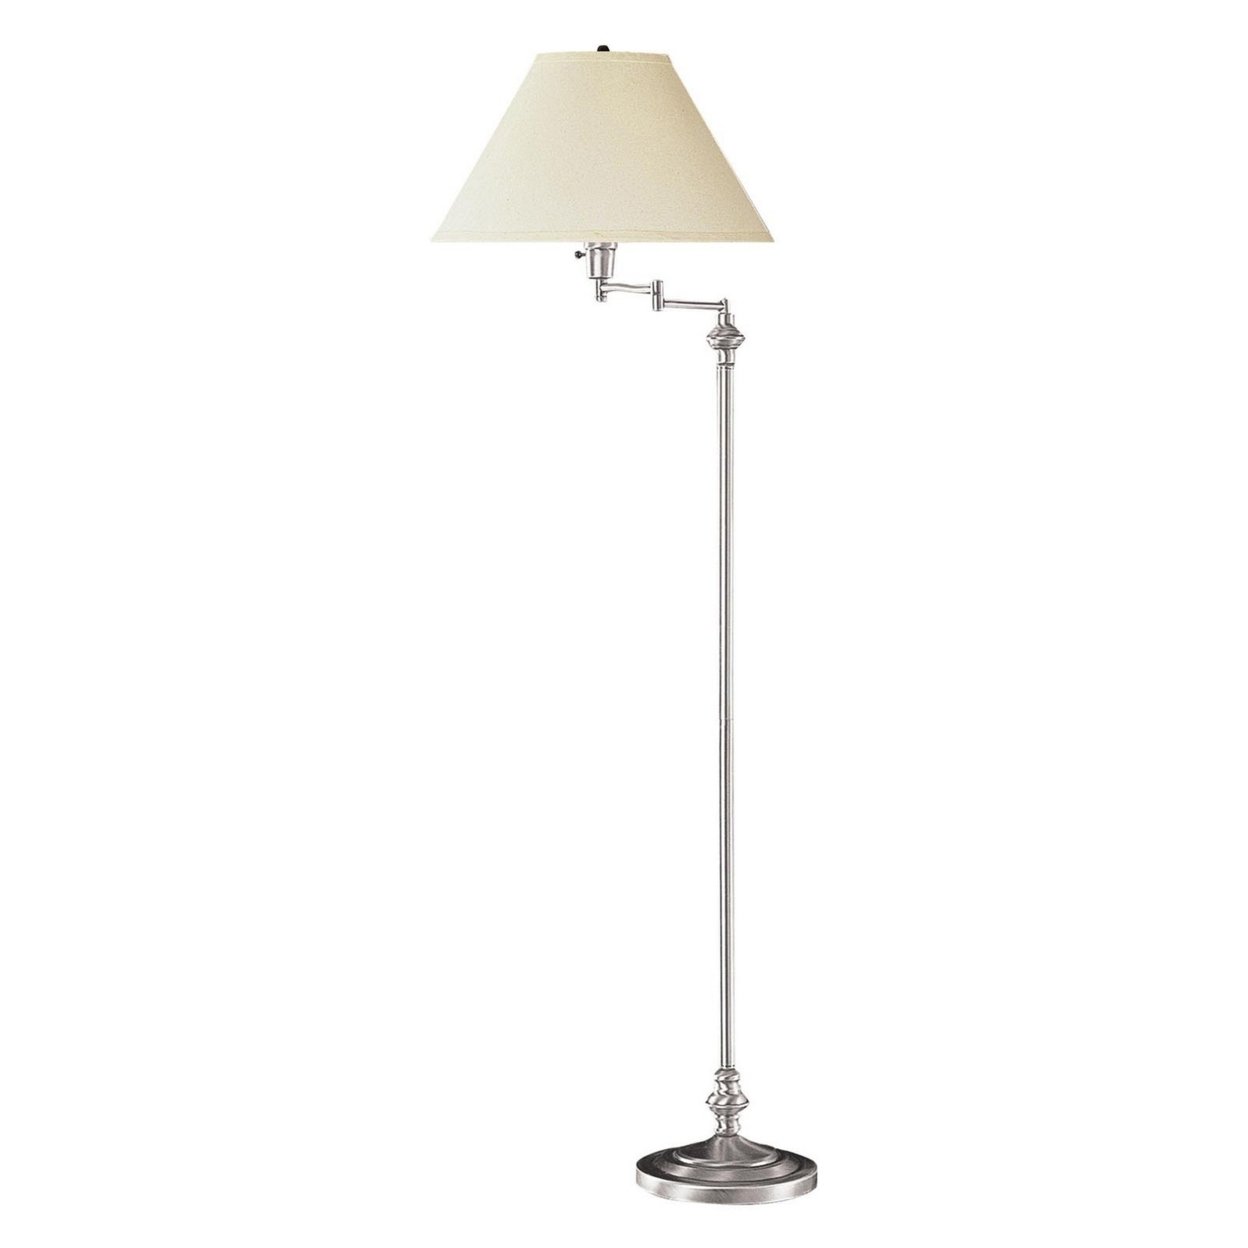 150 Watt Metal Floor Lamp With Swing Arm And Fabric Conical Shade, Silver- Saltoro Sherpi